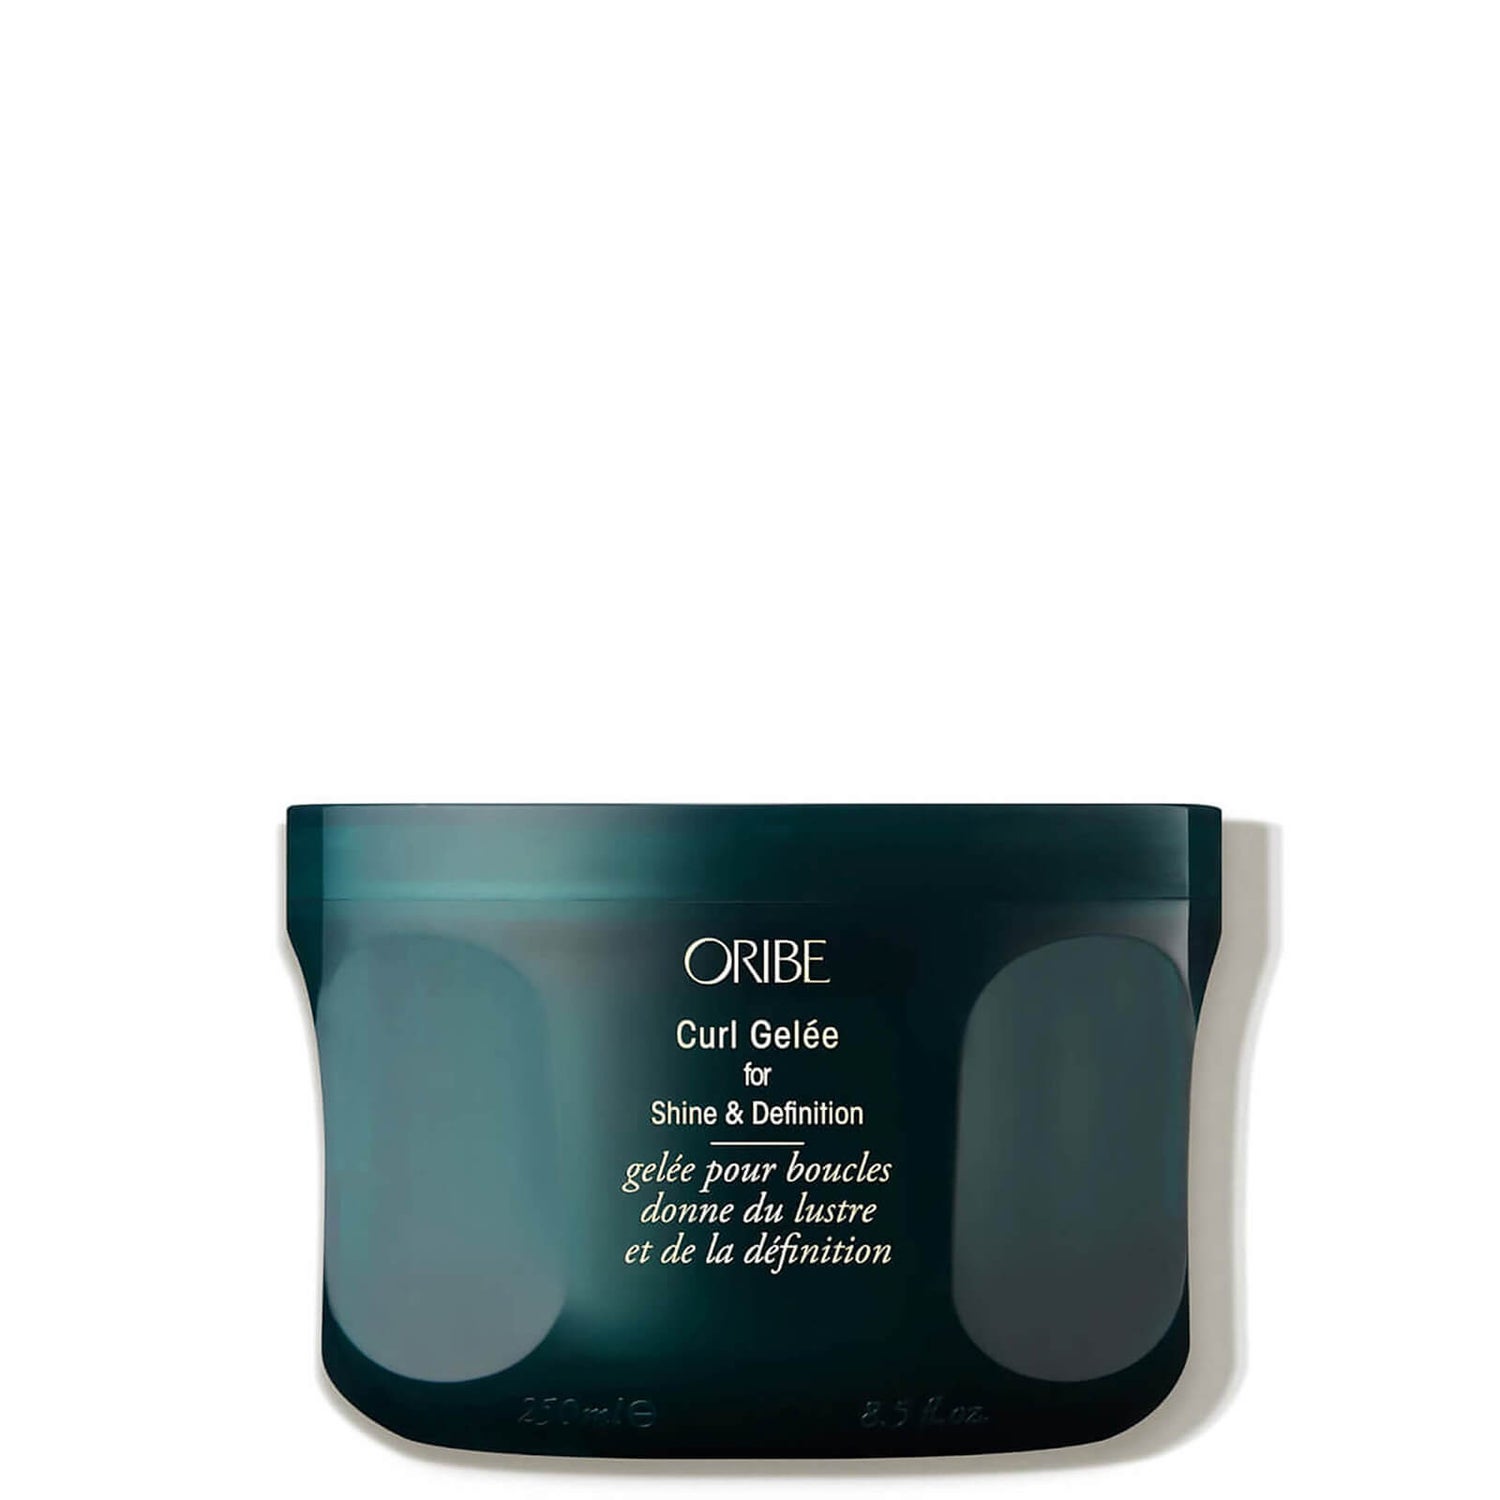 Oribe Curl Gelée for Shine & Definition 8.5 oz